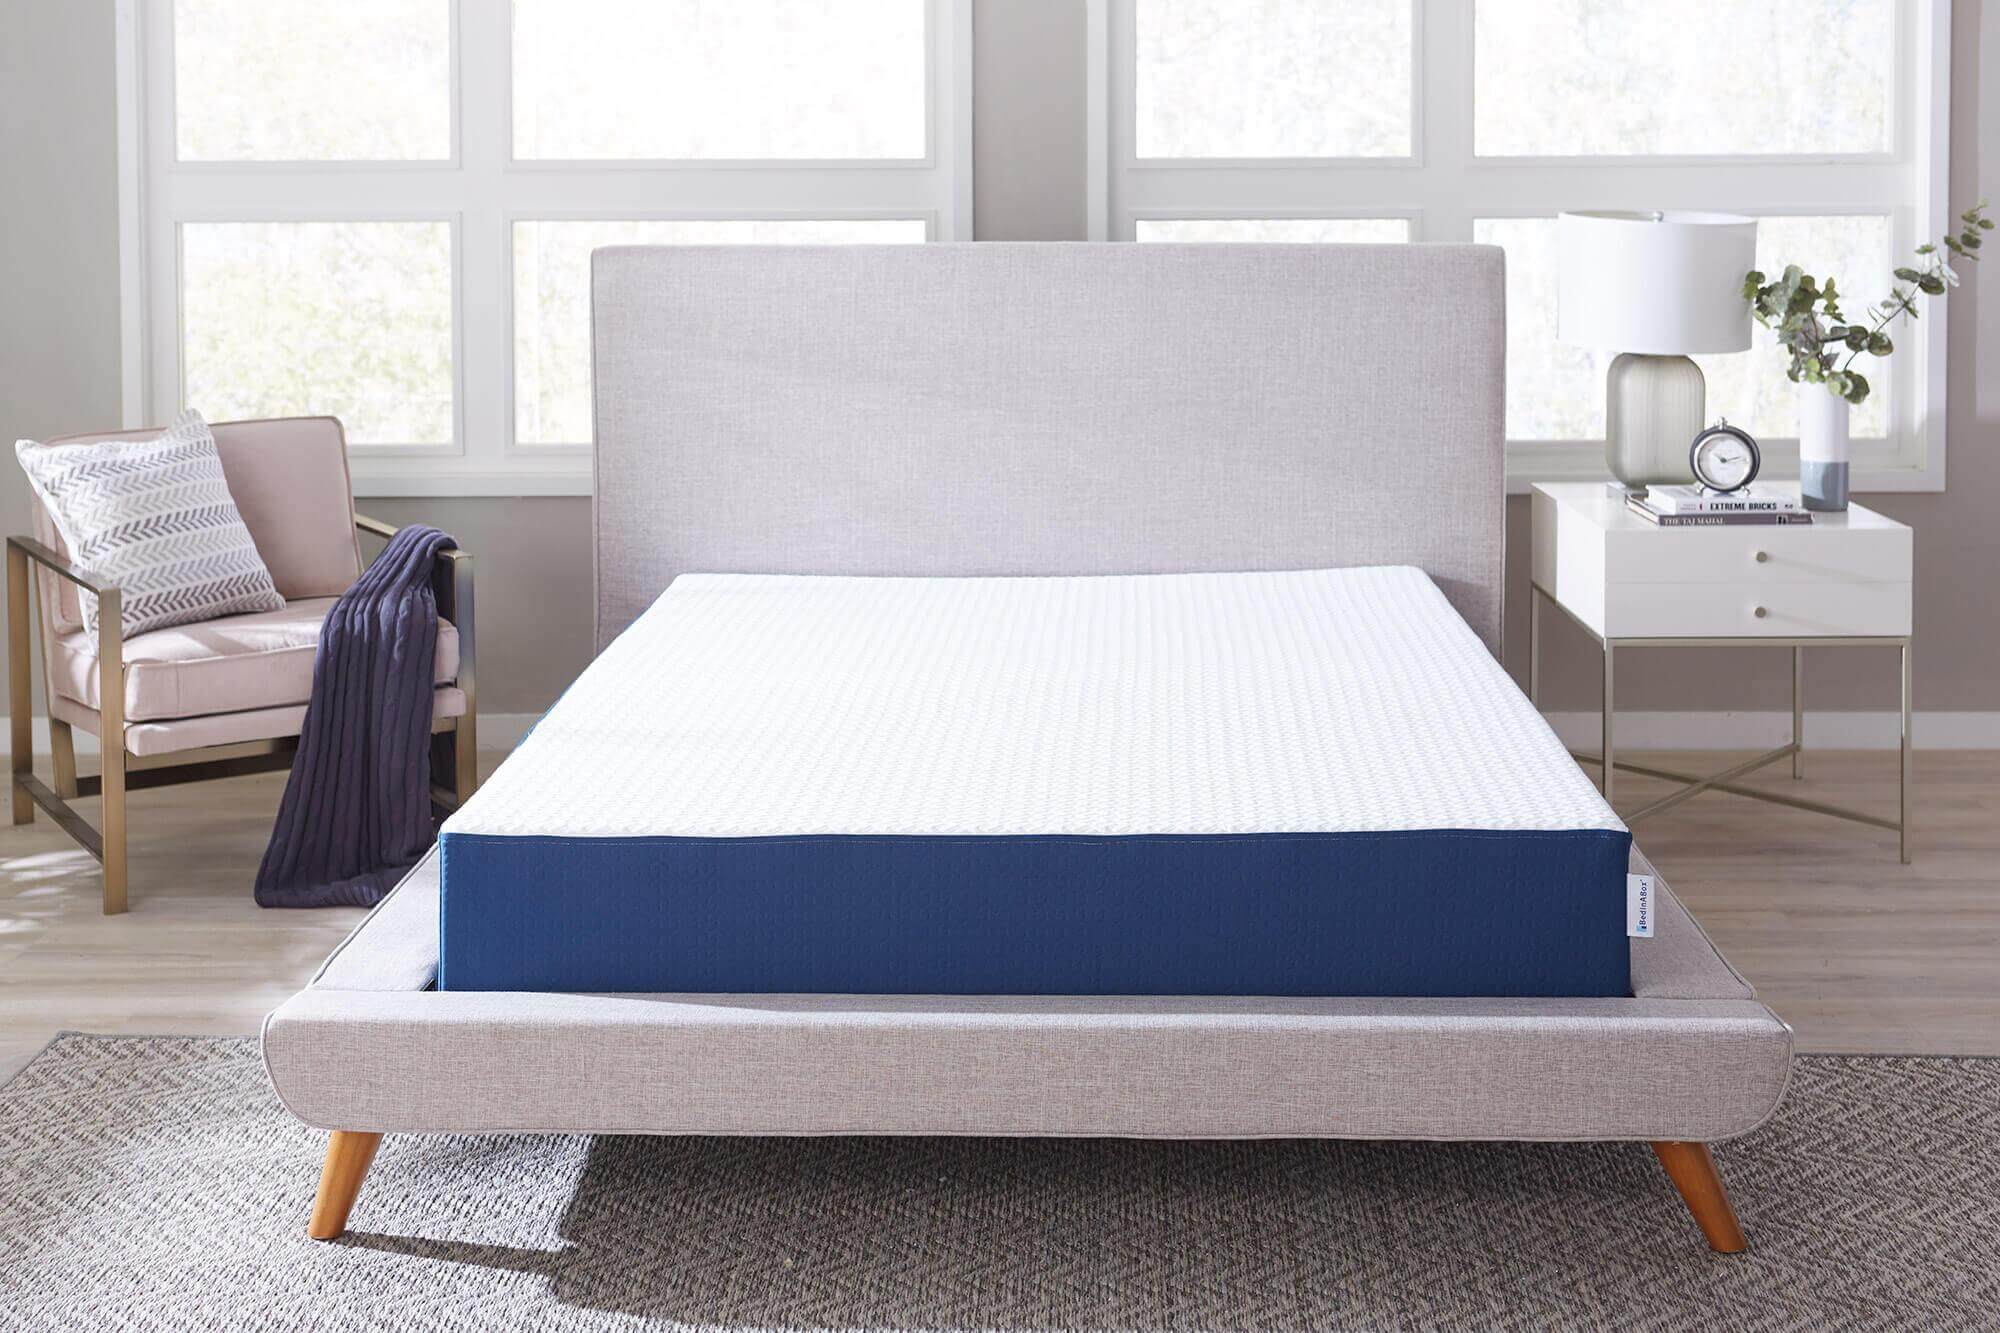 The Original: The Classic Comfort Murphy Bed Mattress